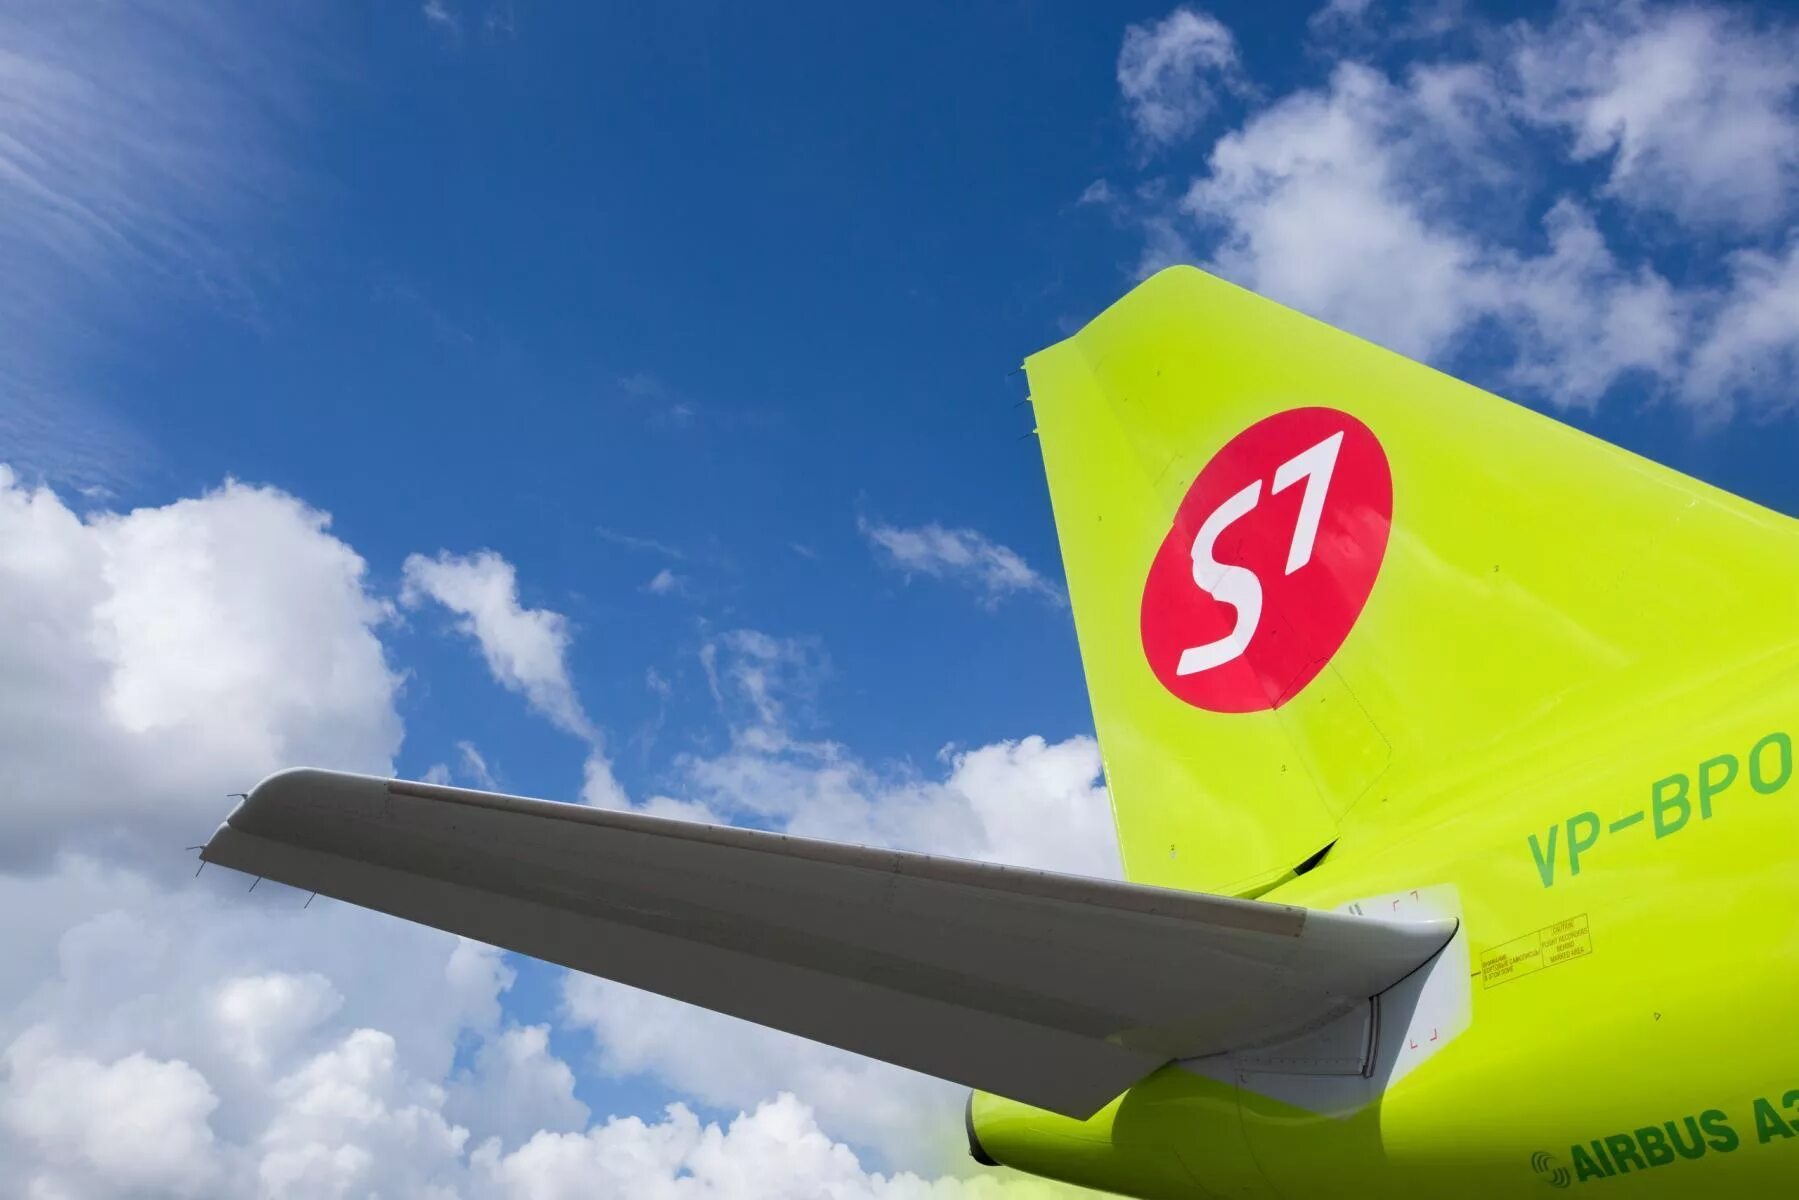 S 7 seven. S7 Airlines авиакомпания. Логан s7 Airlines. Самолёты авиакомпании s7. S7 Airlines logo.